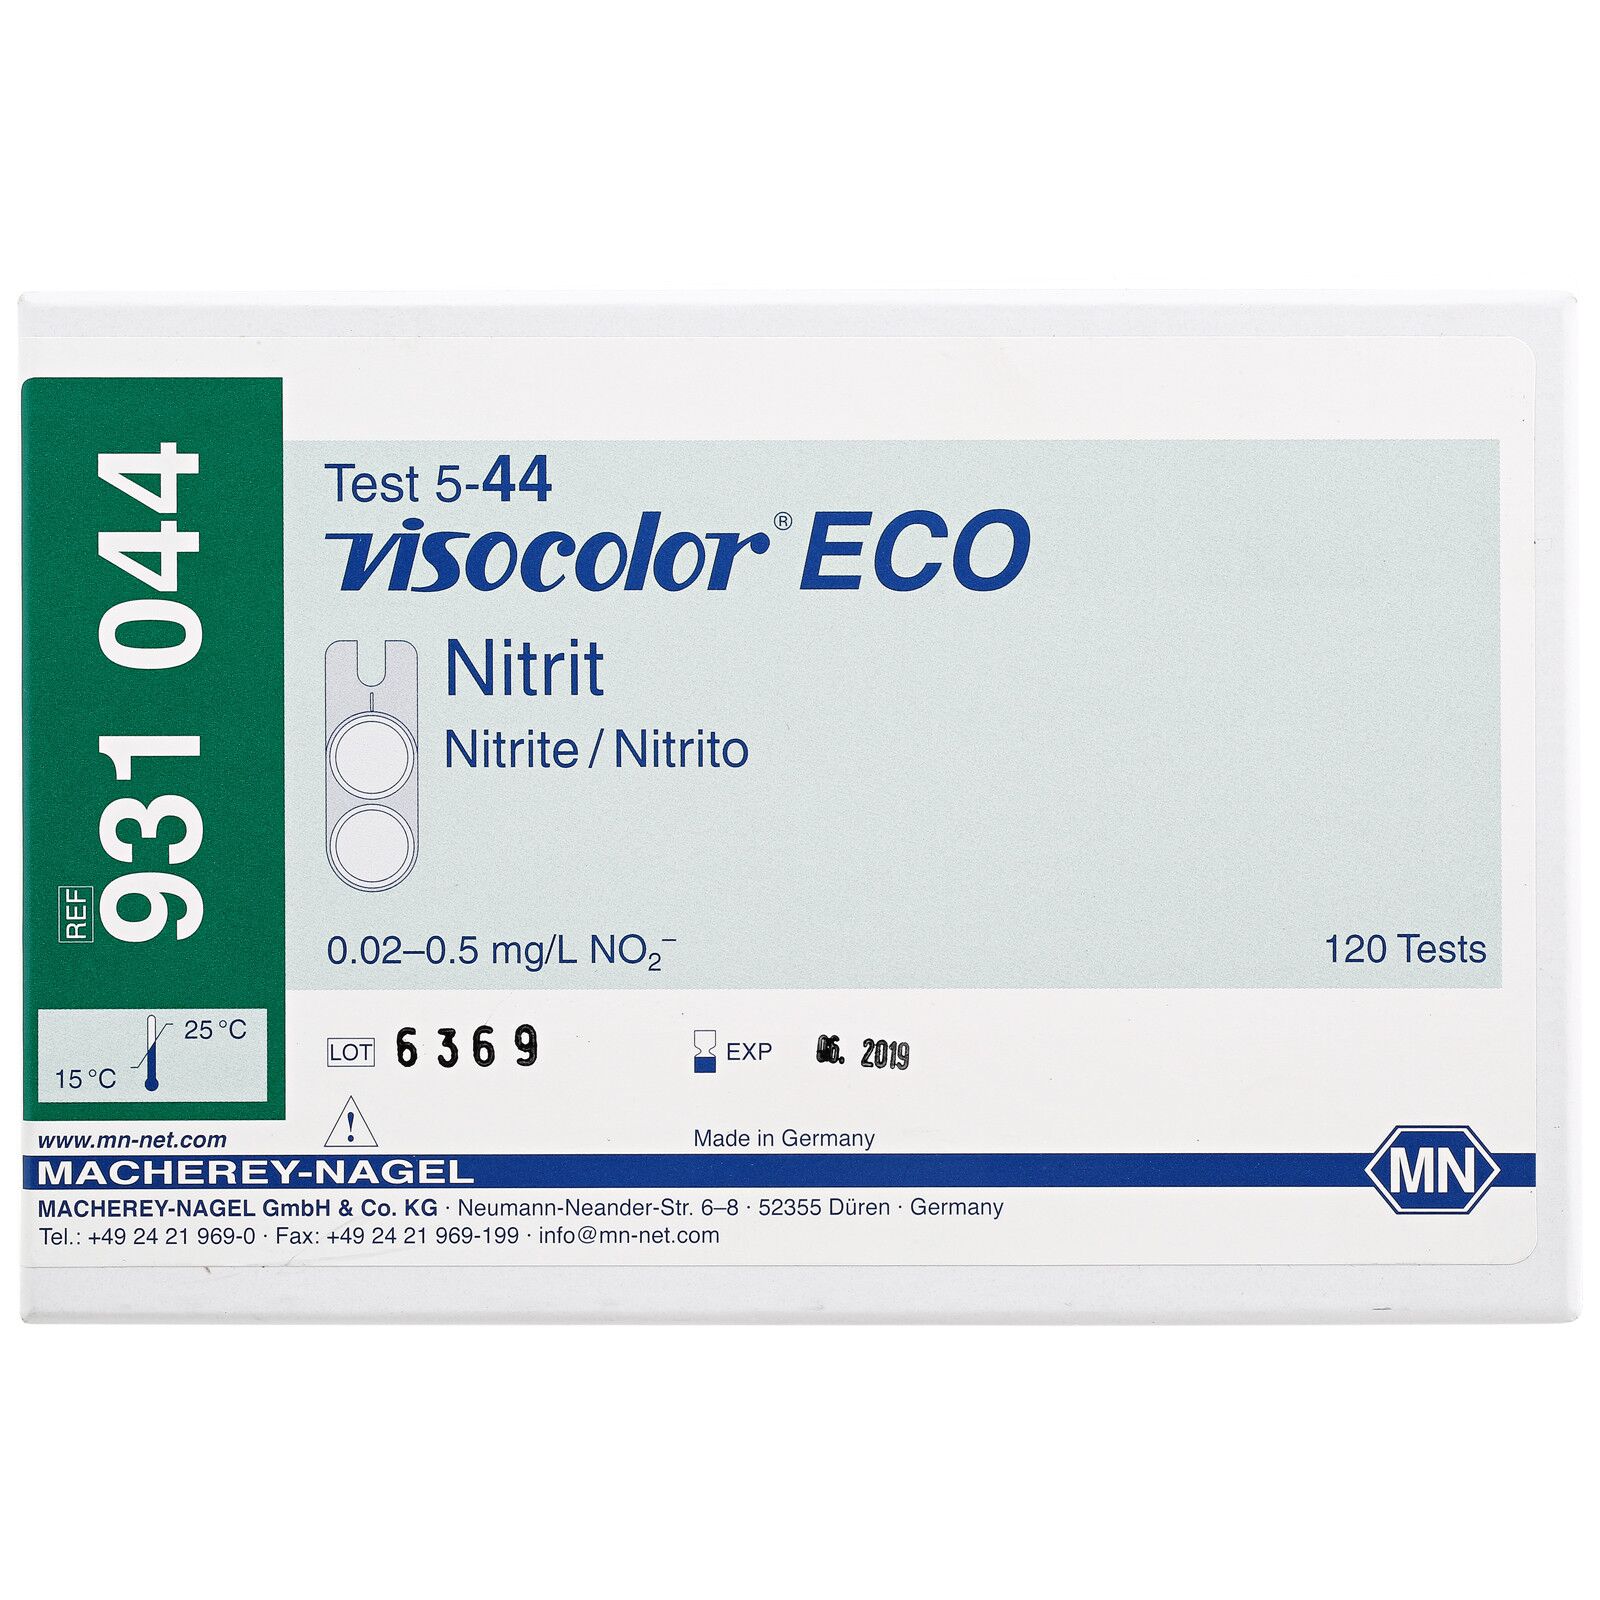 Macherey-Nagel - Visocolor ECO - Nitrit - Test